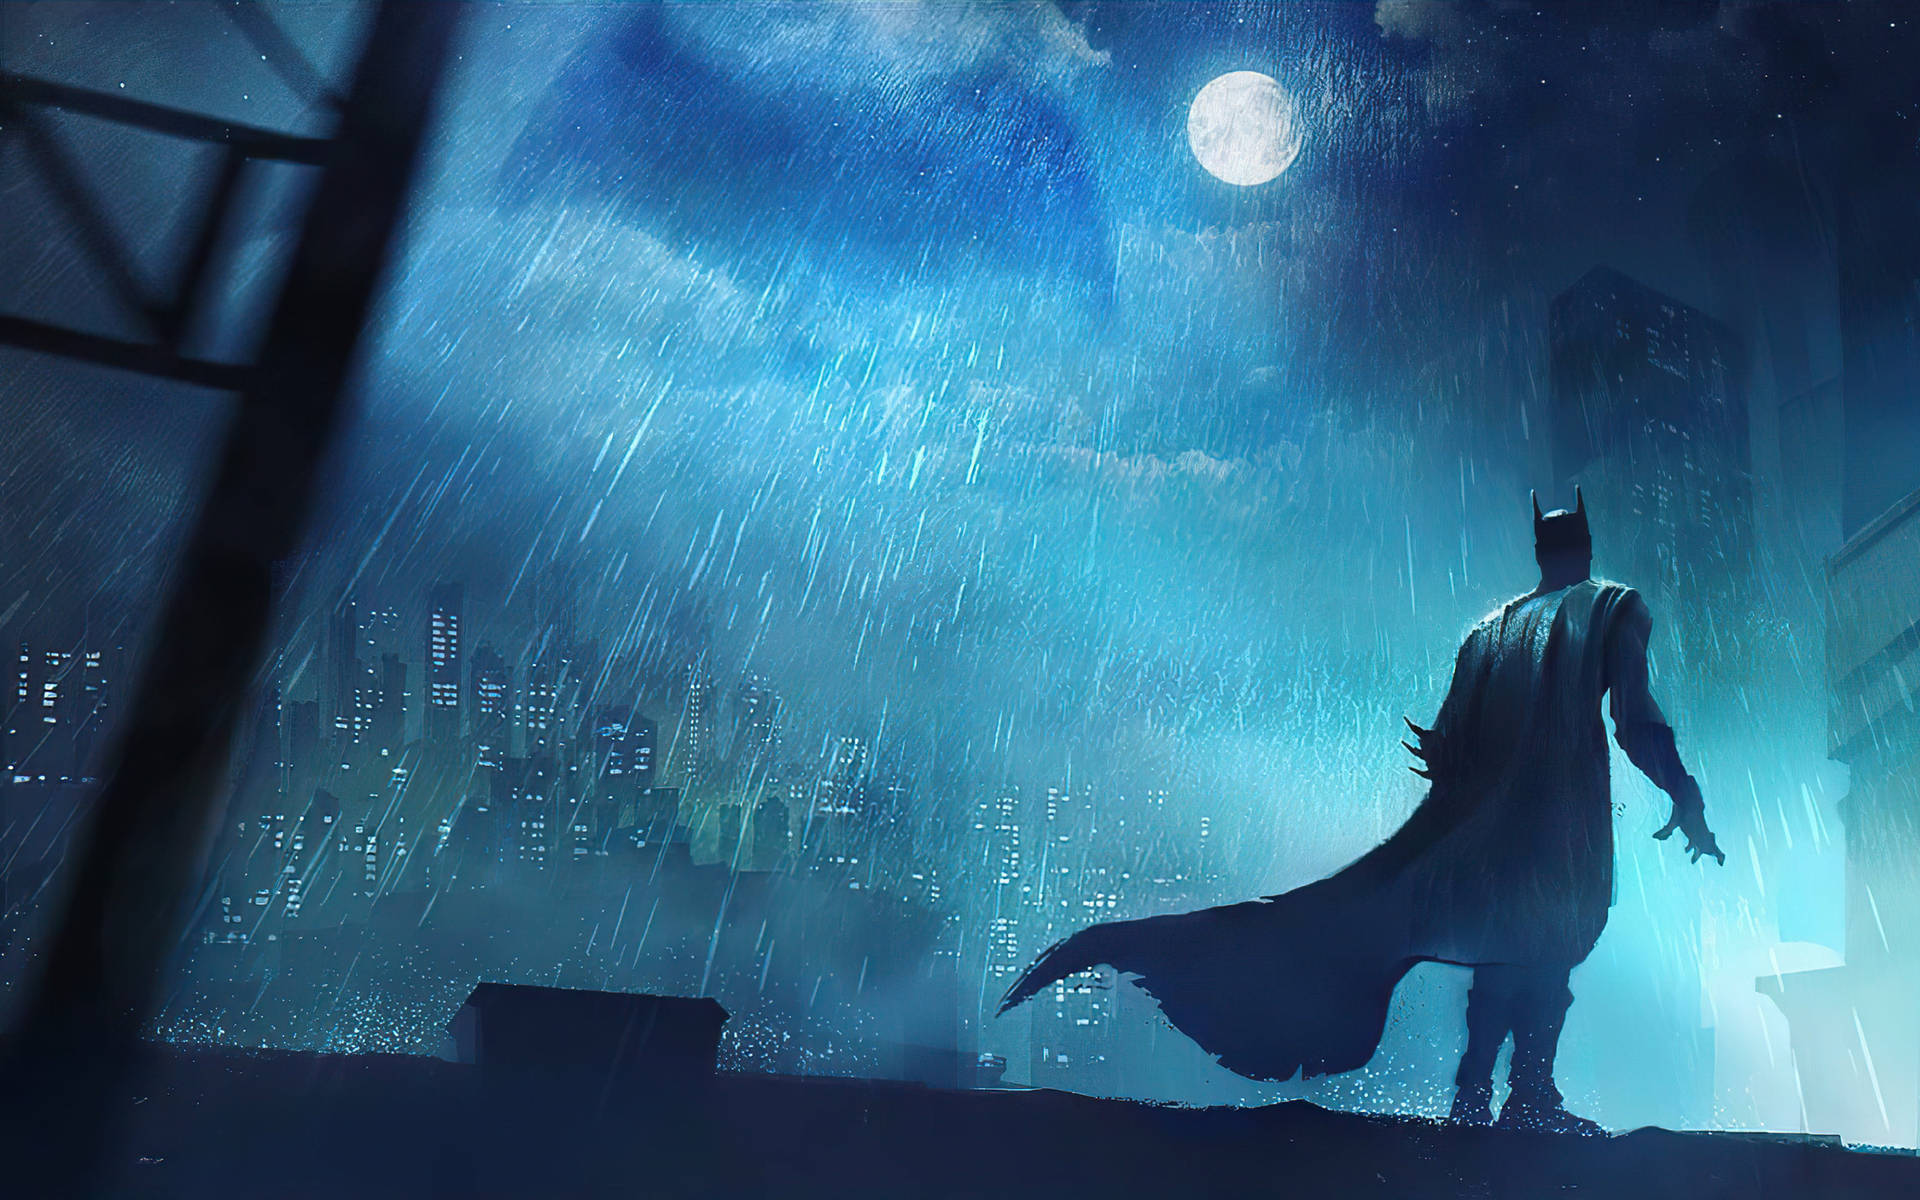 Batman In The Rain For Phone Wallpaper